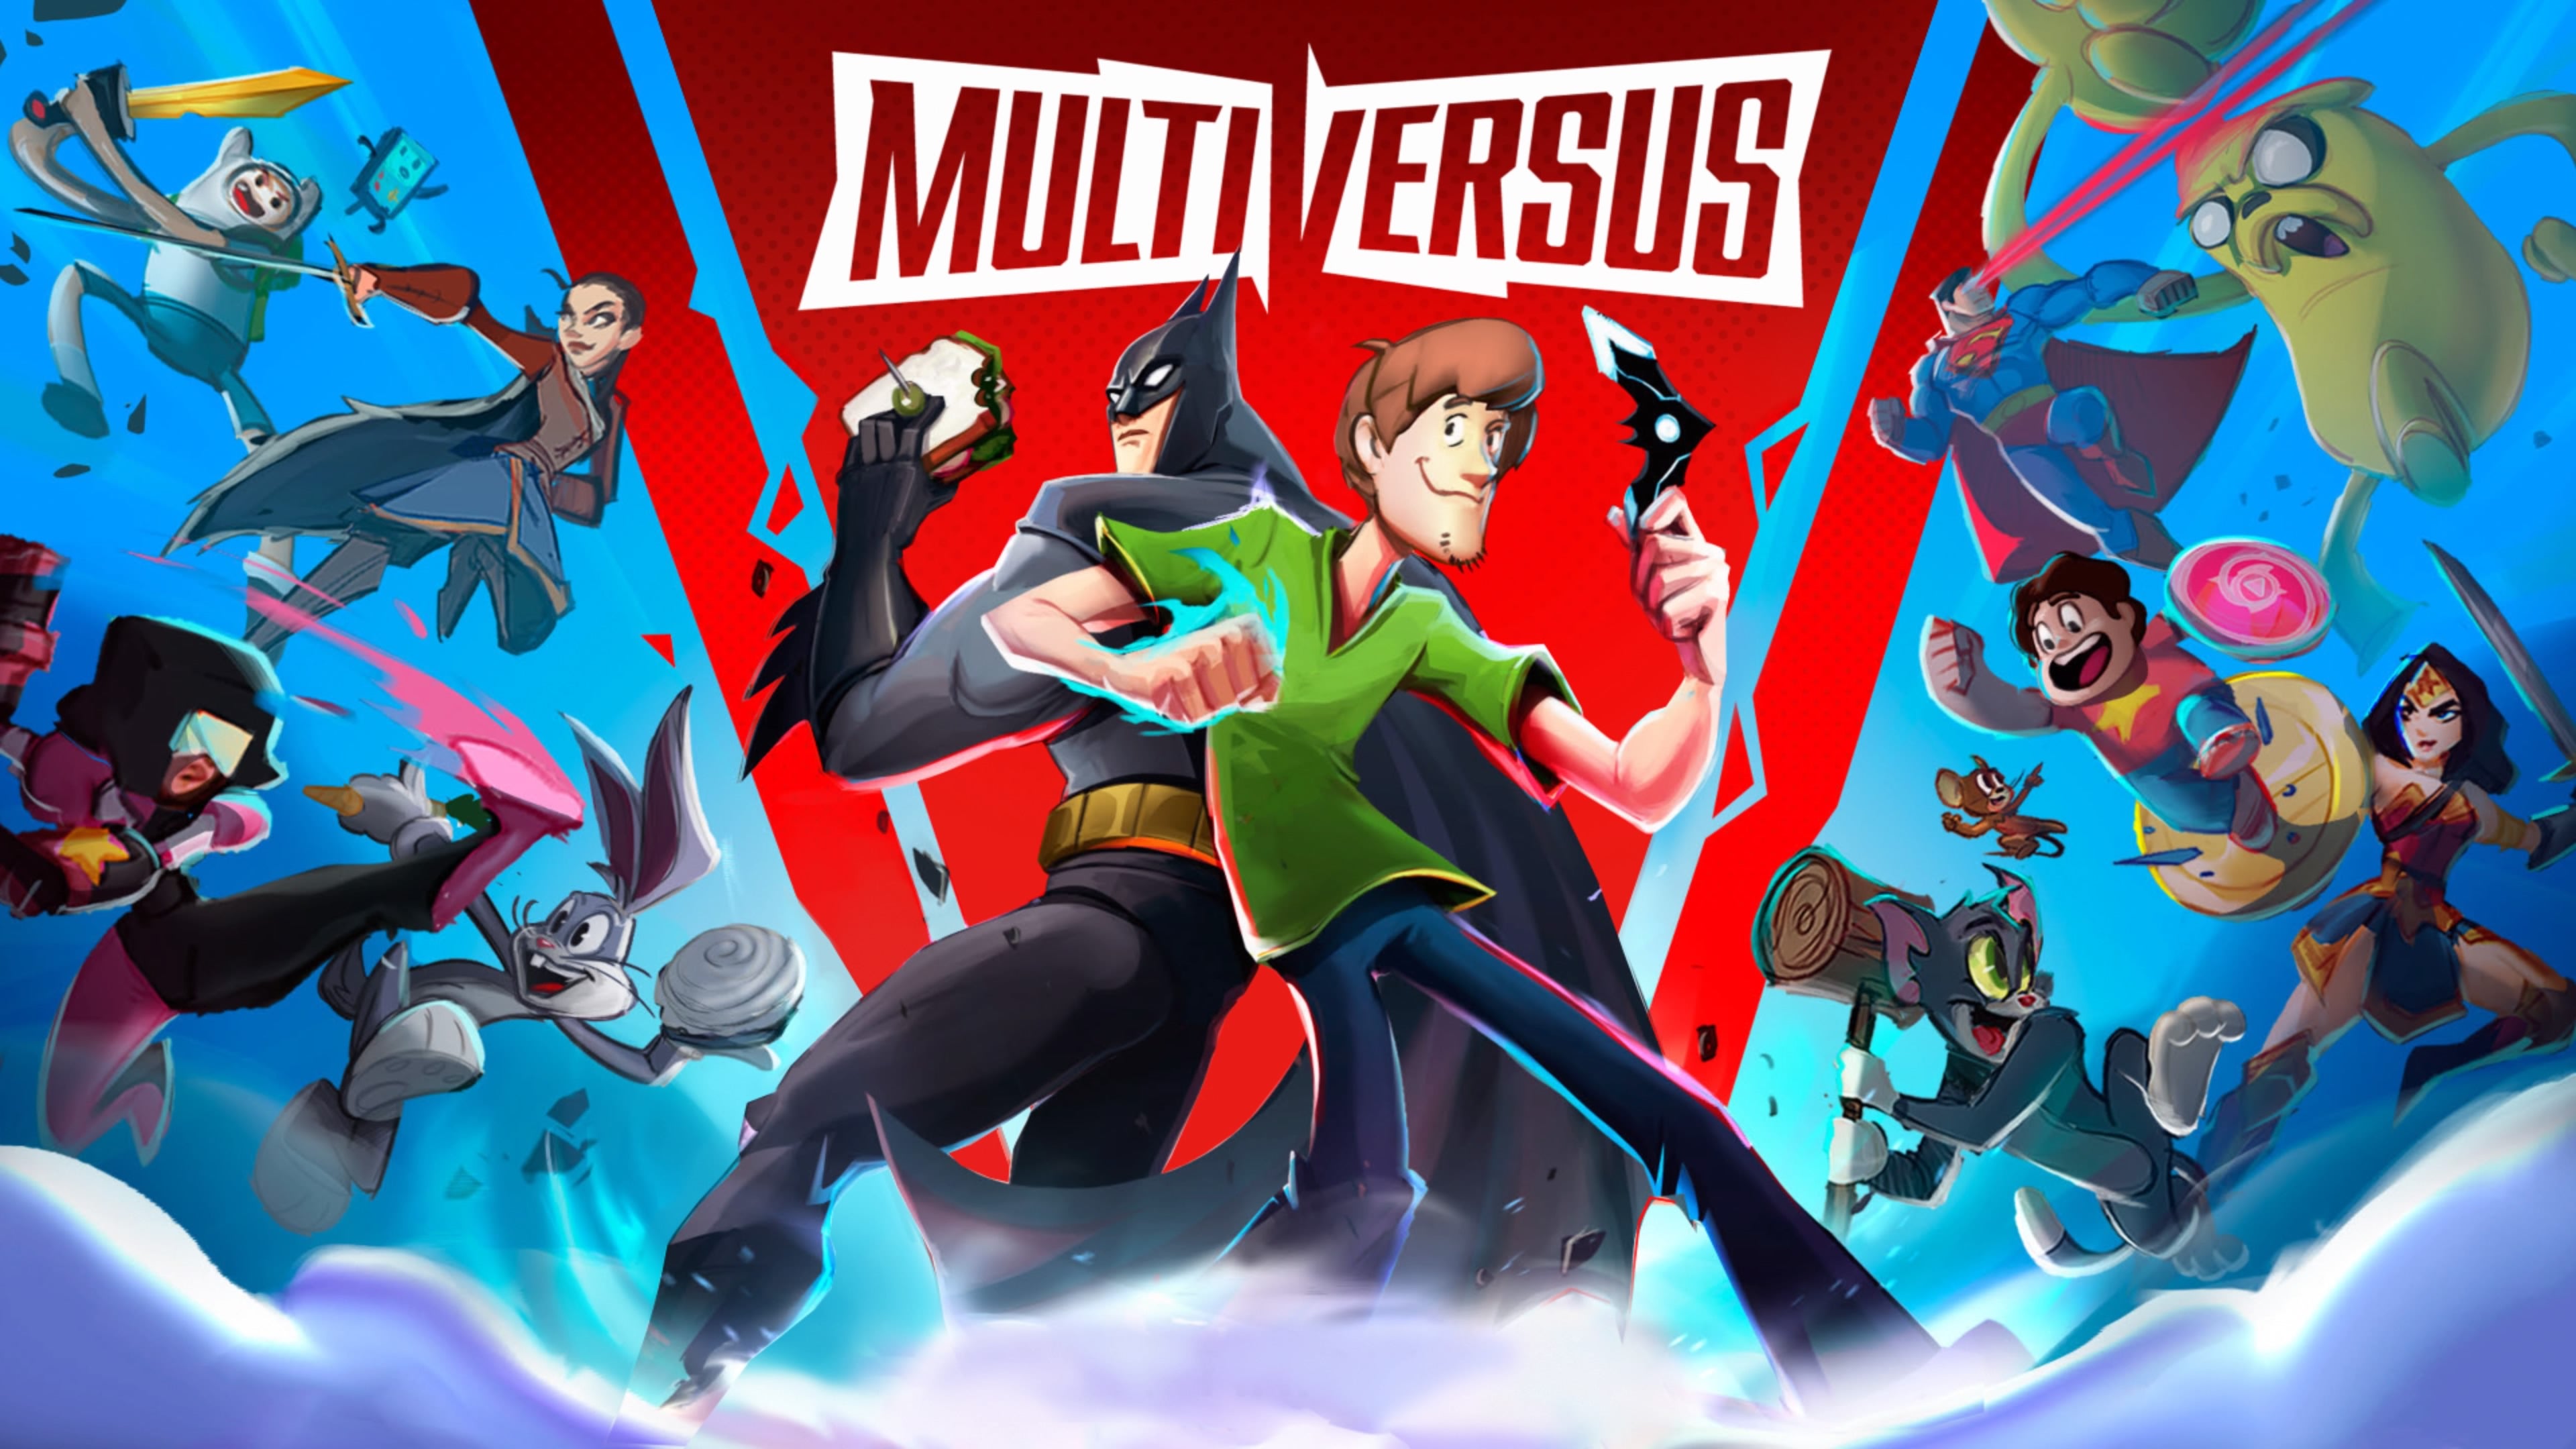 Official art for Multiversus, the upcoming platform fighter from Warner Bros.